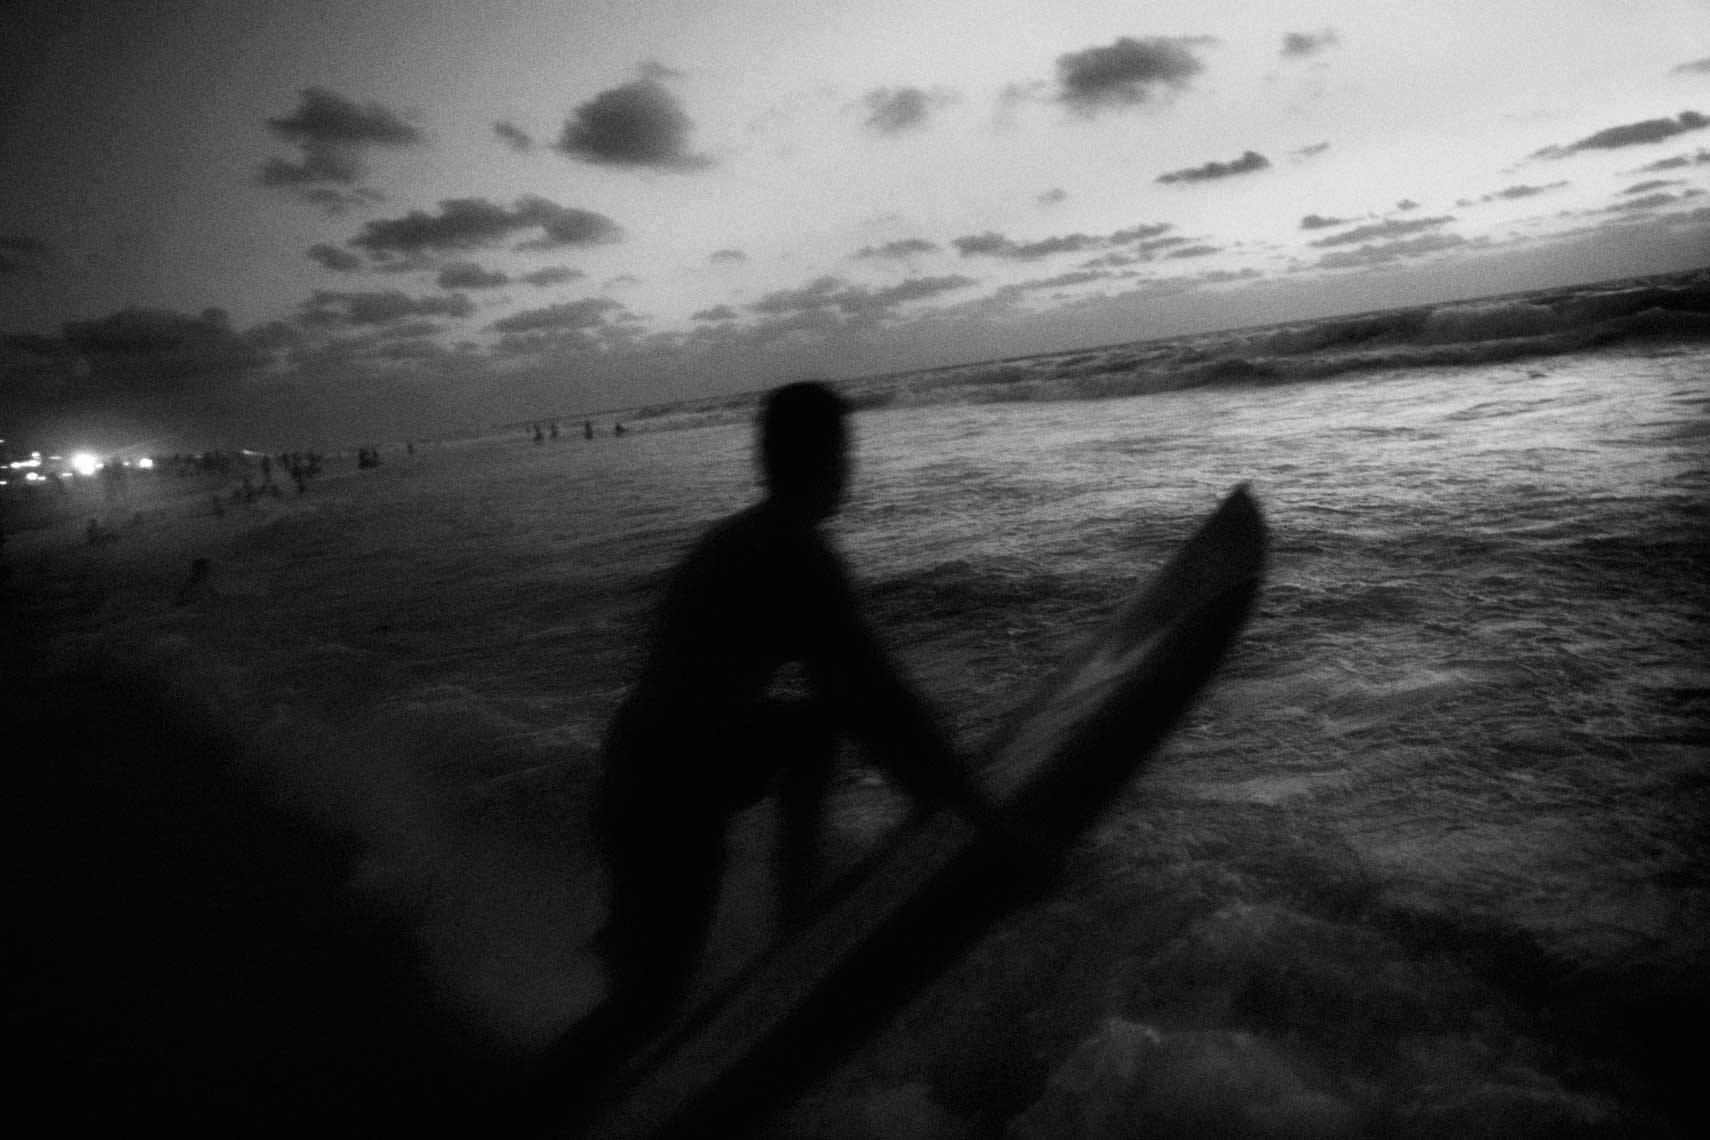 Gaza surfer